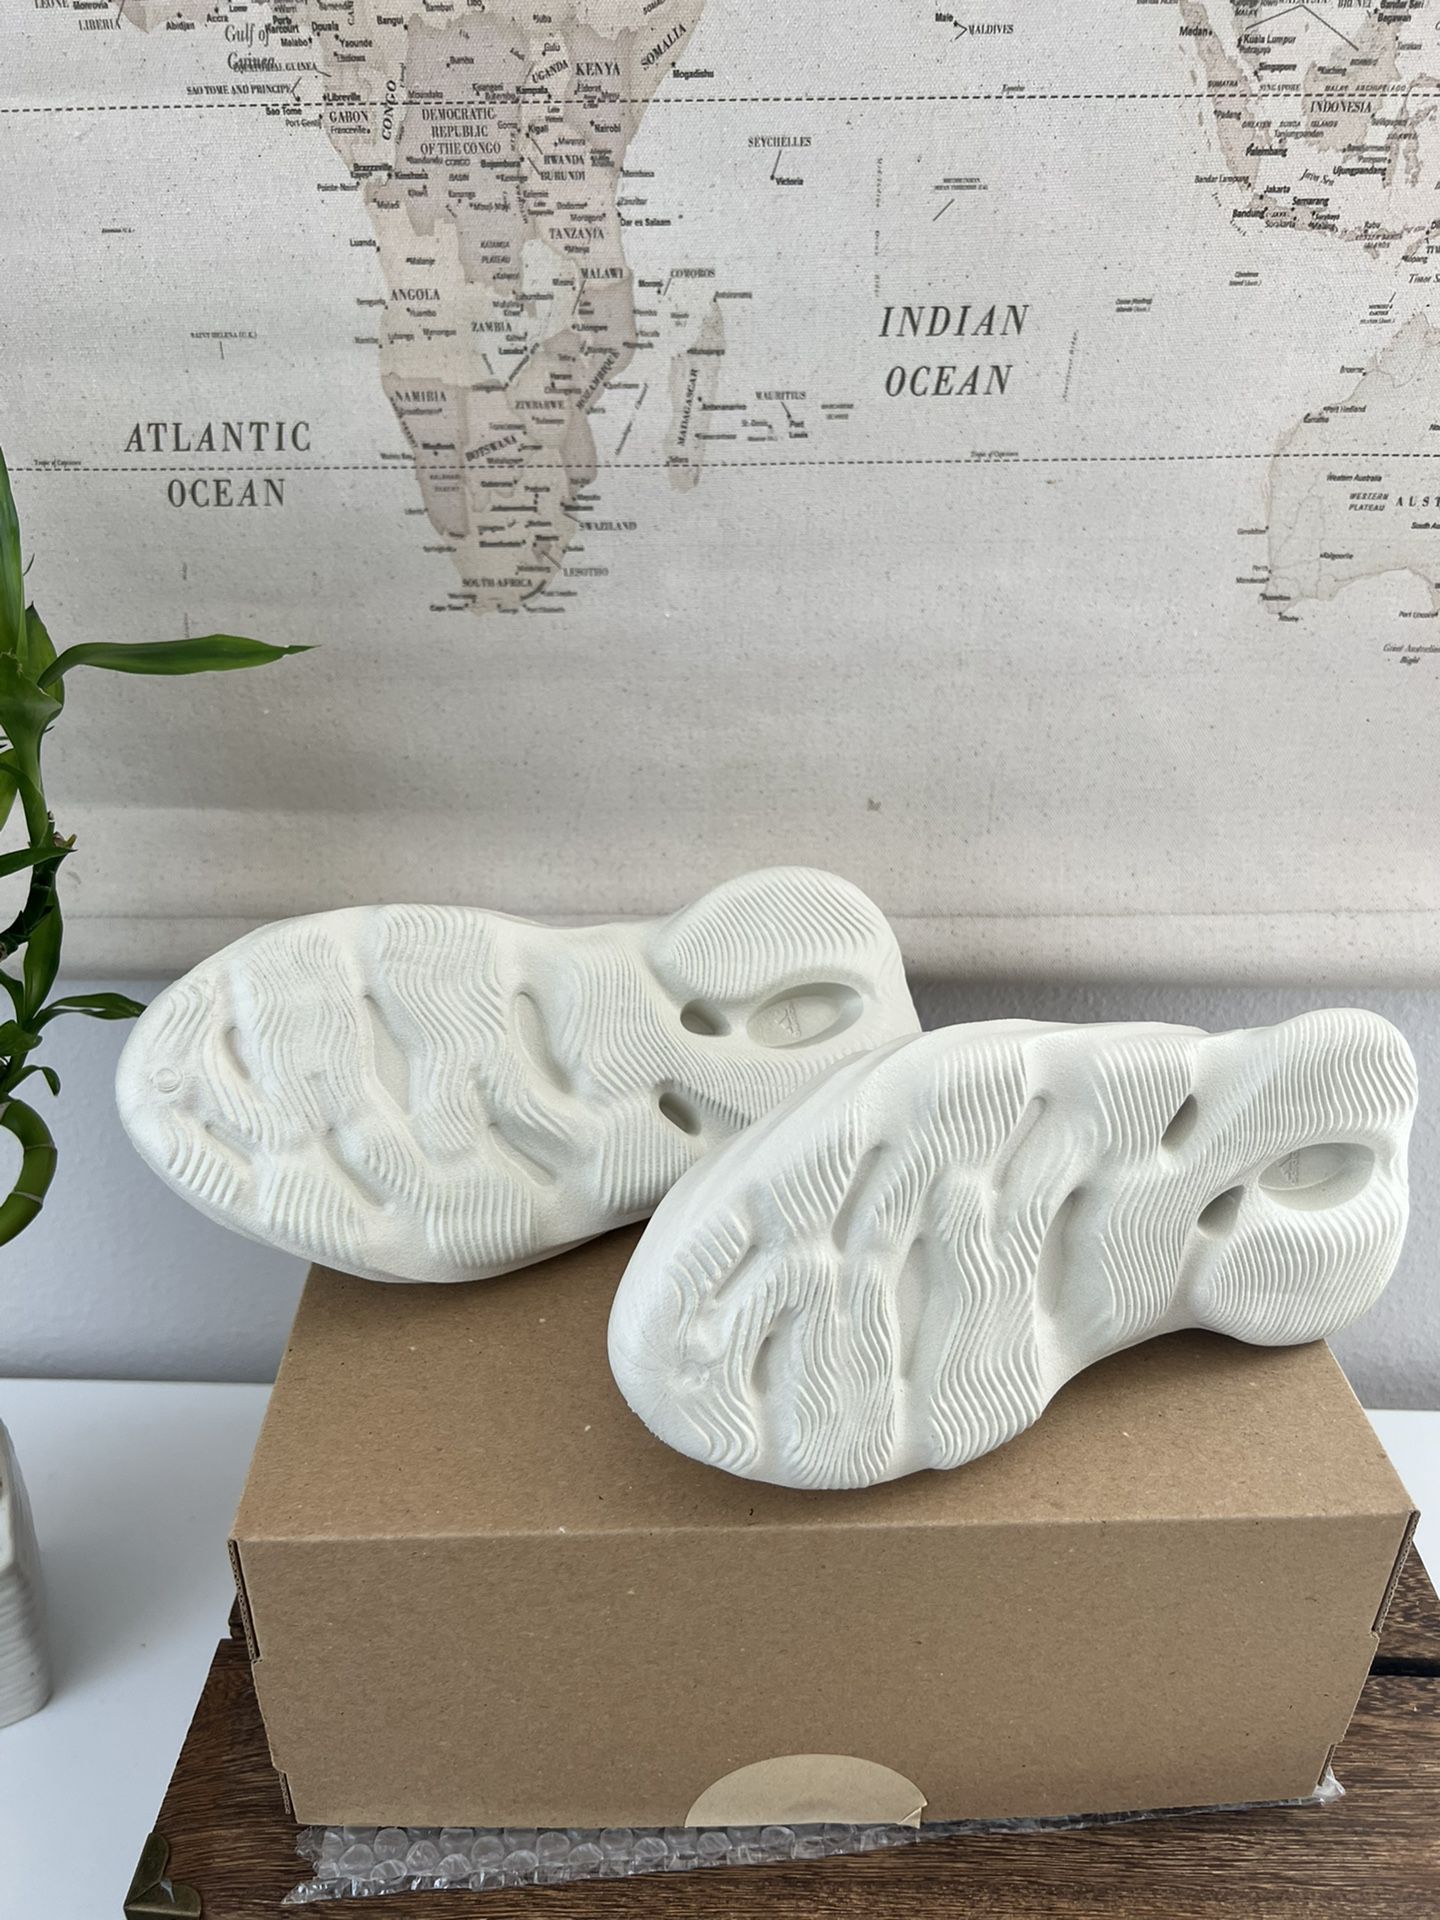 Yeezy Foam Runner Ararat Size 8 - New - Authentic 